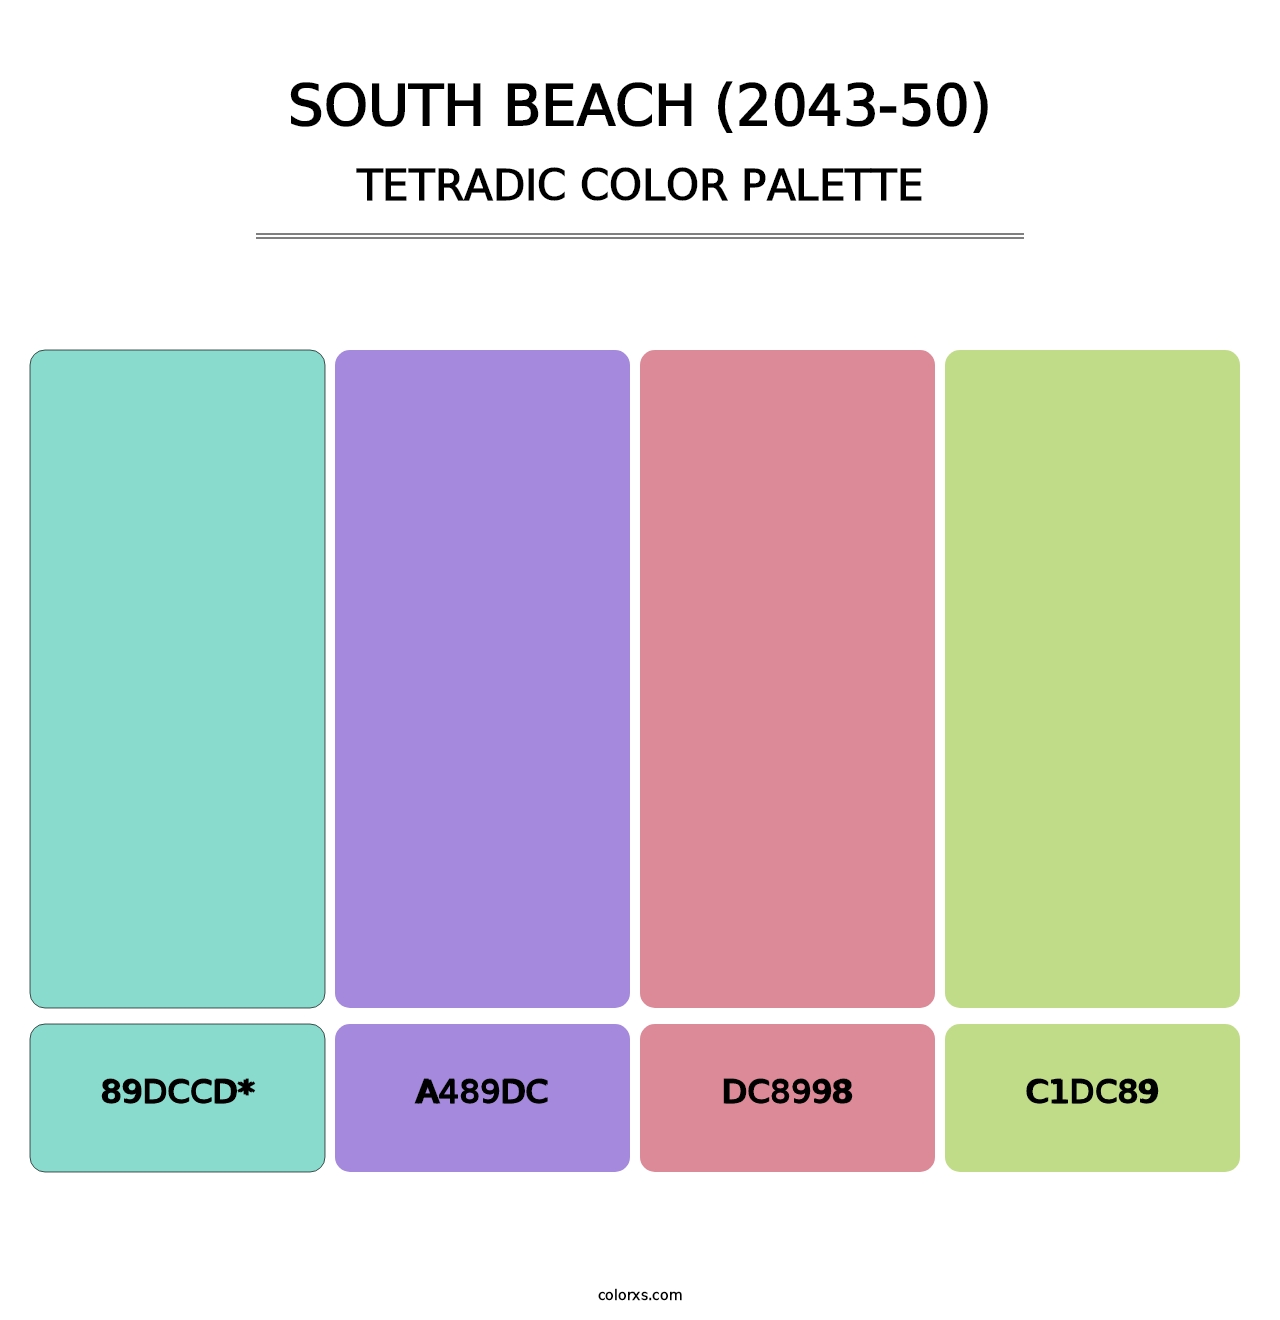 South Beach (2043-50) - Tetradic Color Palette